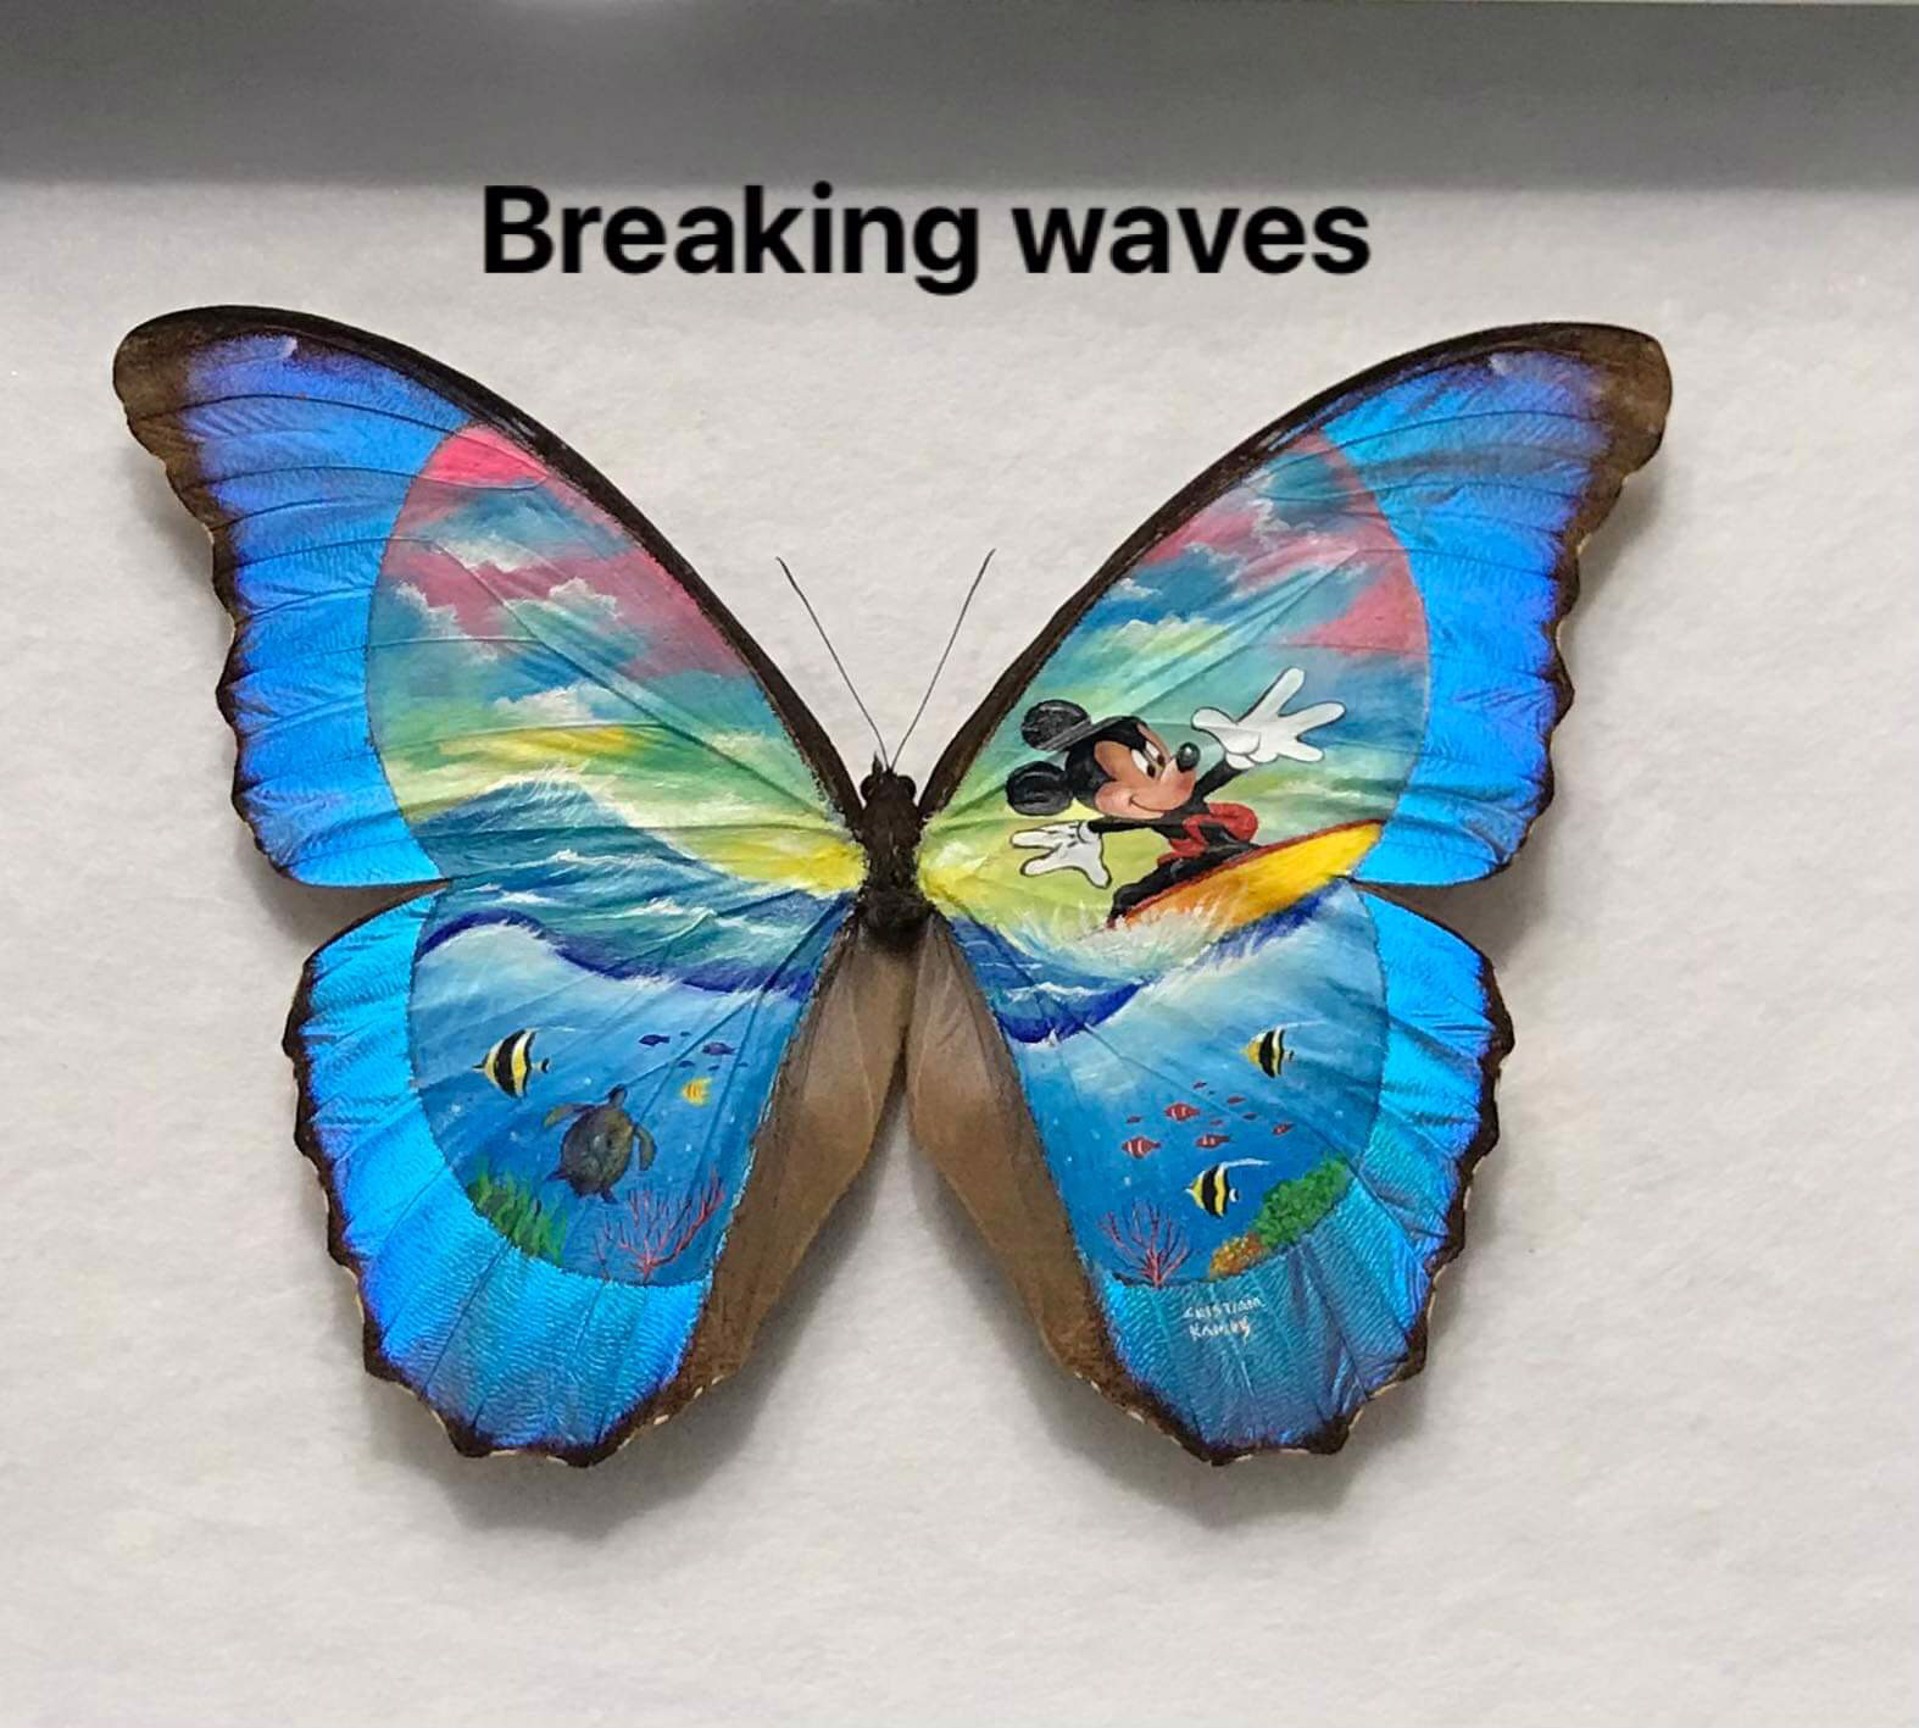 Breaking Waves by Cristiam Ramos